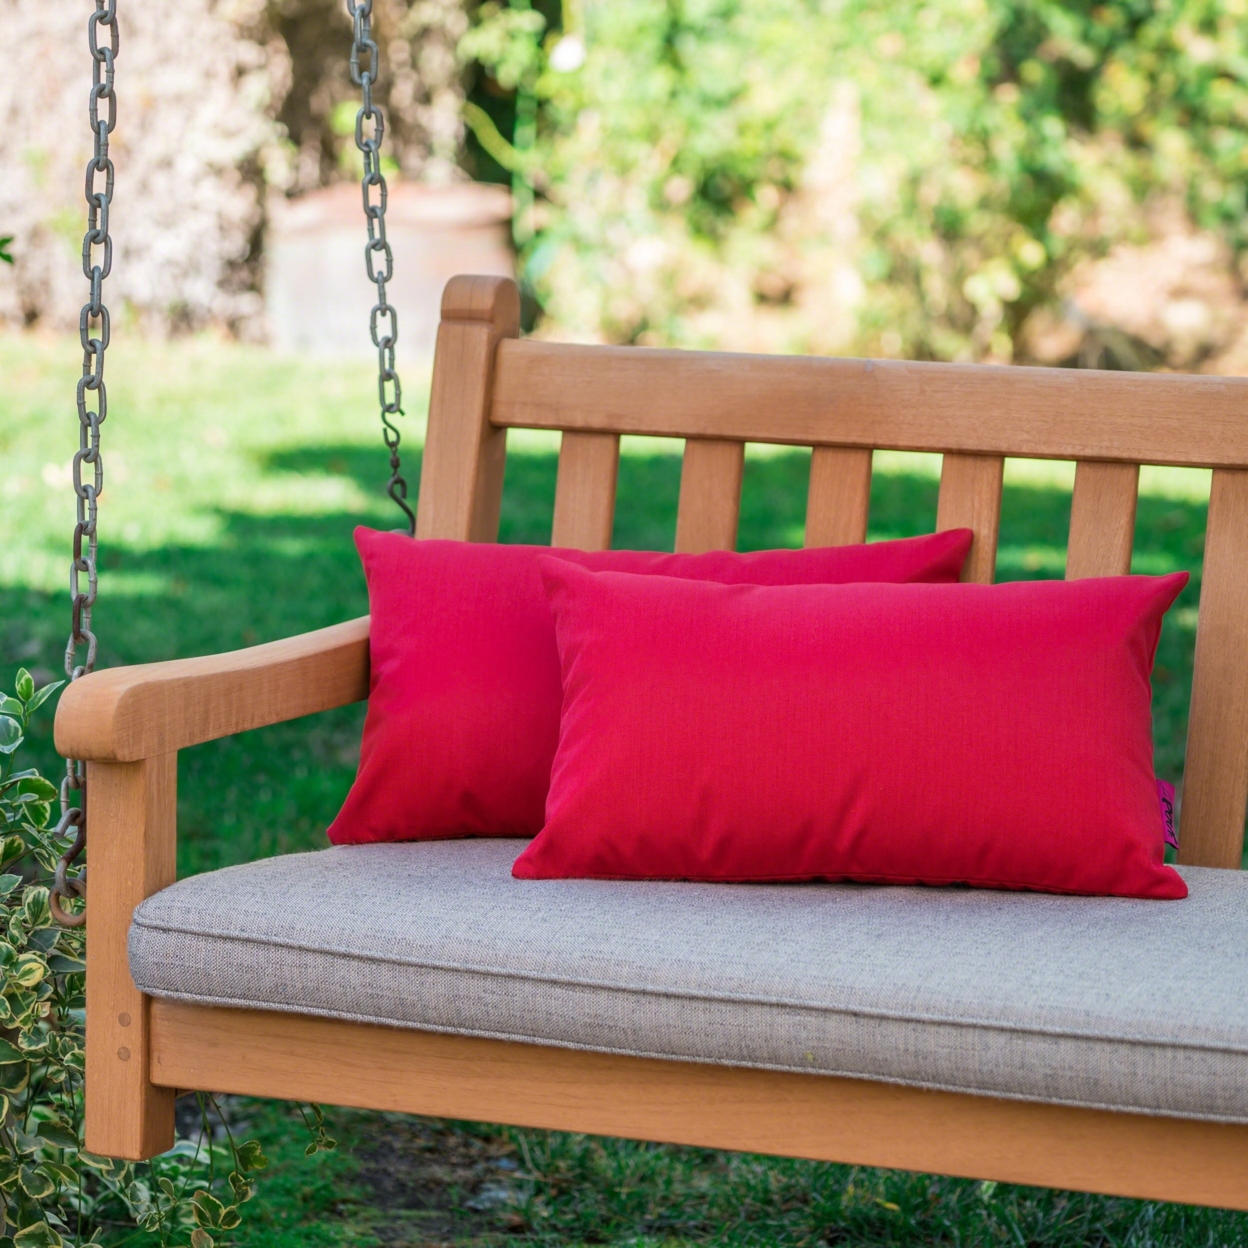 Coronado Outdoor Red Water Resistant Rectangular Throw Pillow - Teal, Single